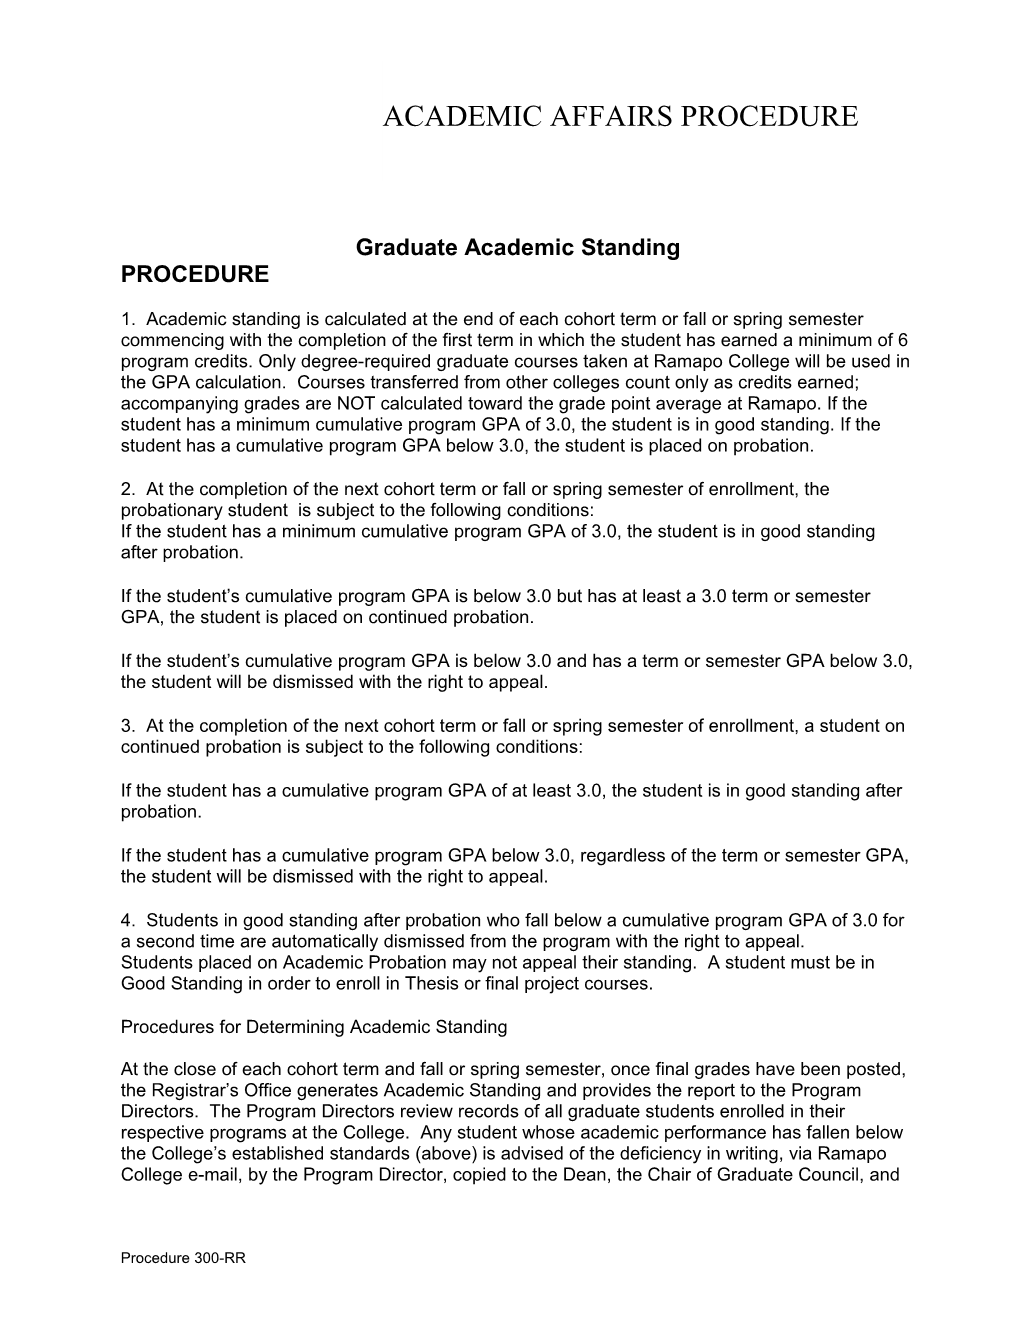 Graduate Academic Standing